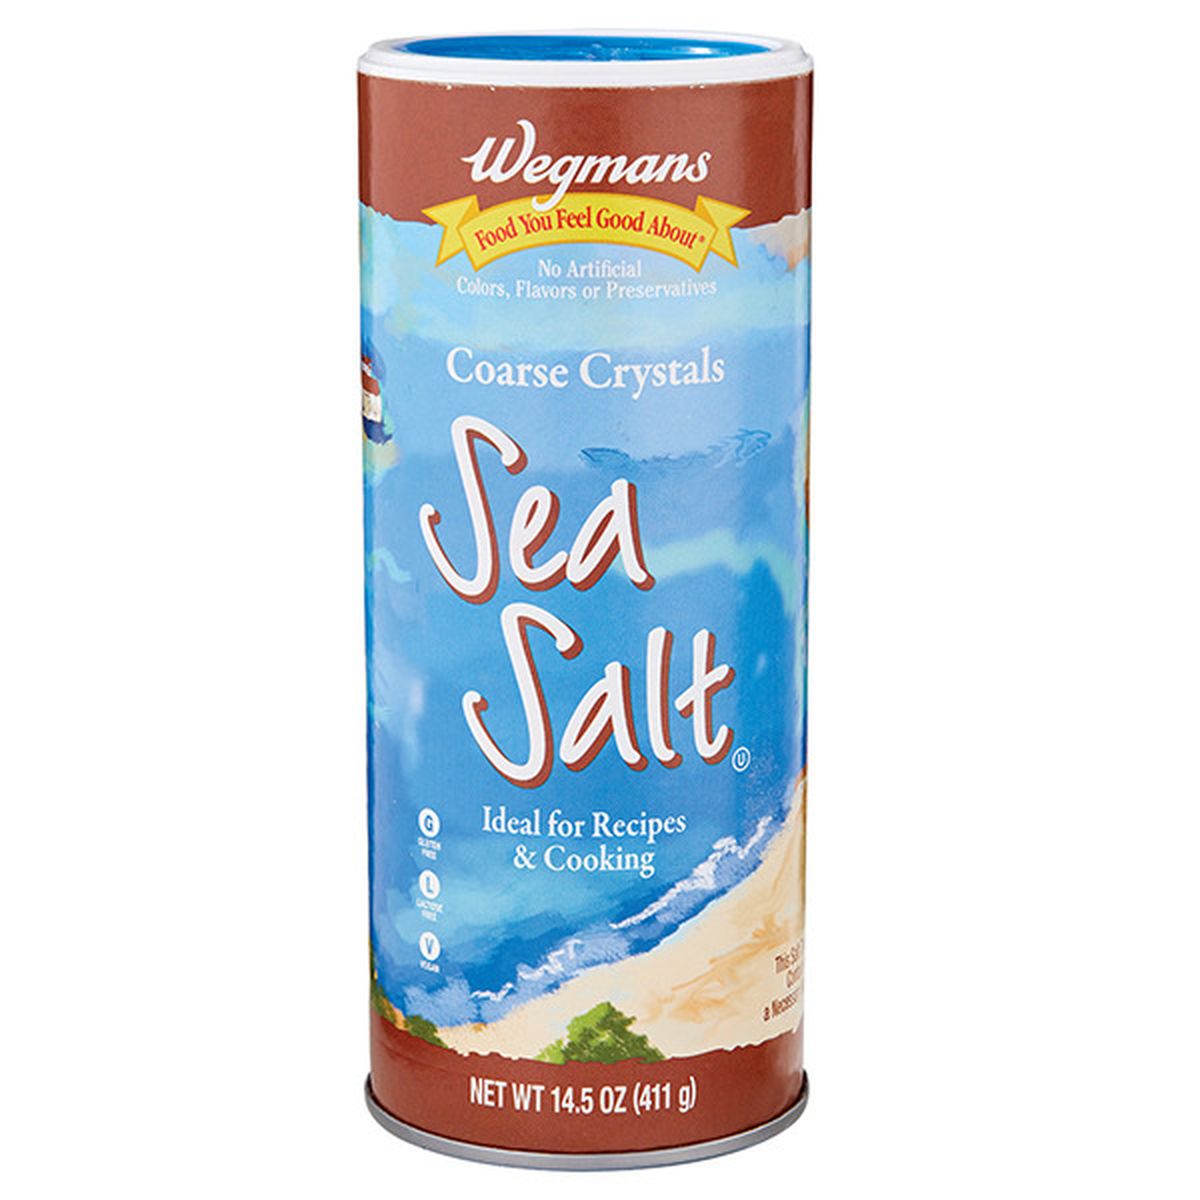 Calories in Wegmans Coarse Crystals Sea Salt